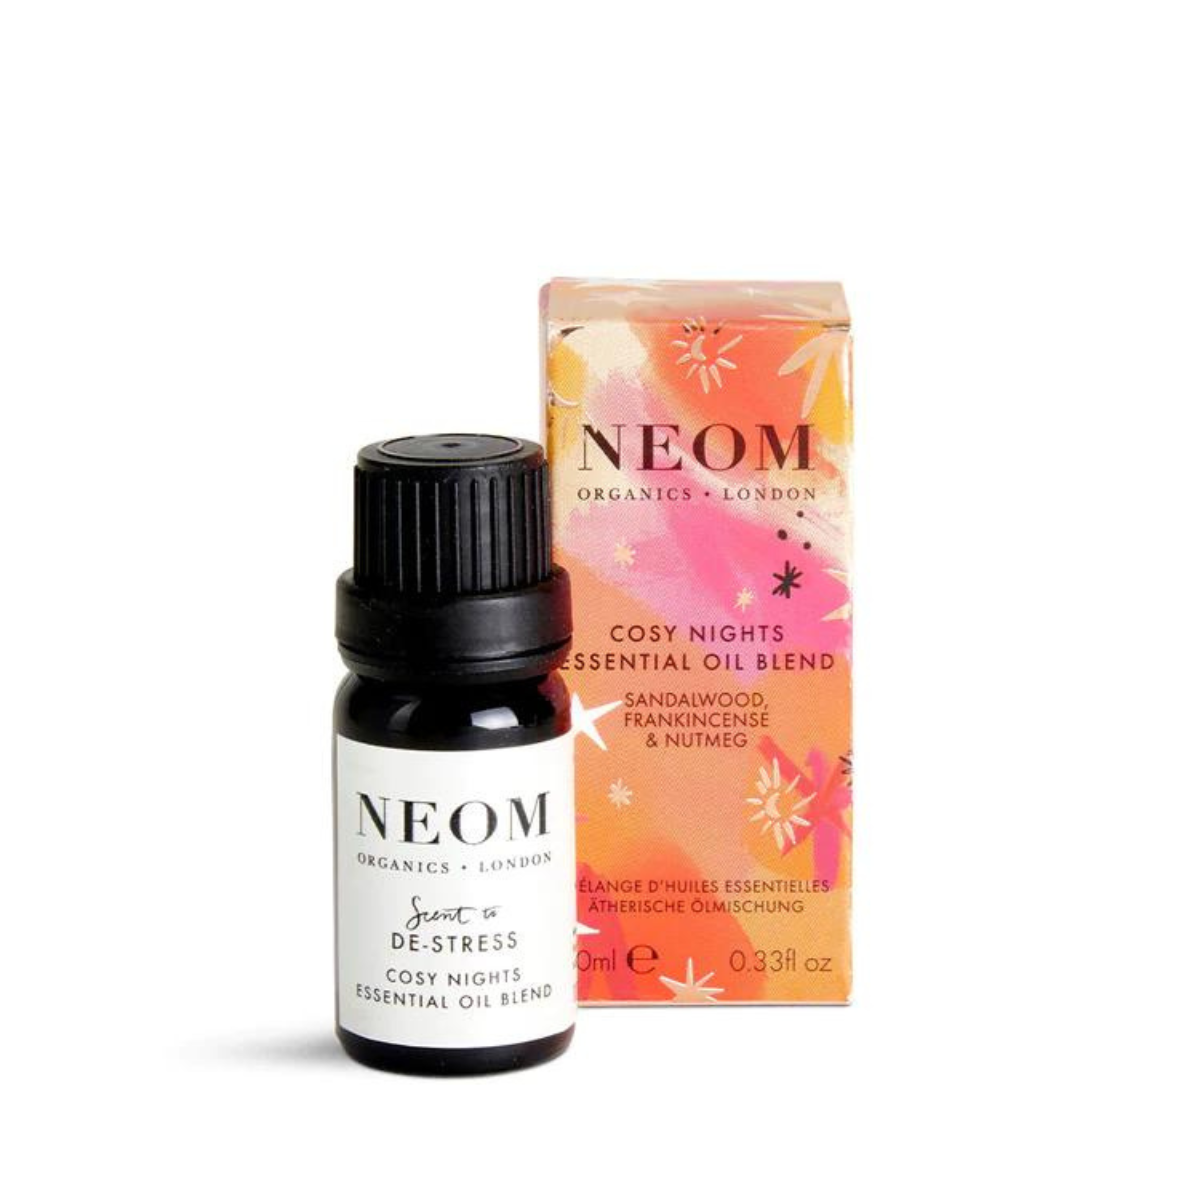 Neom Cosy Nights Essential Oil Blend 10ml.